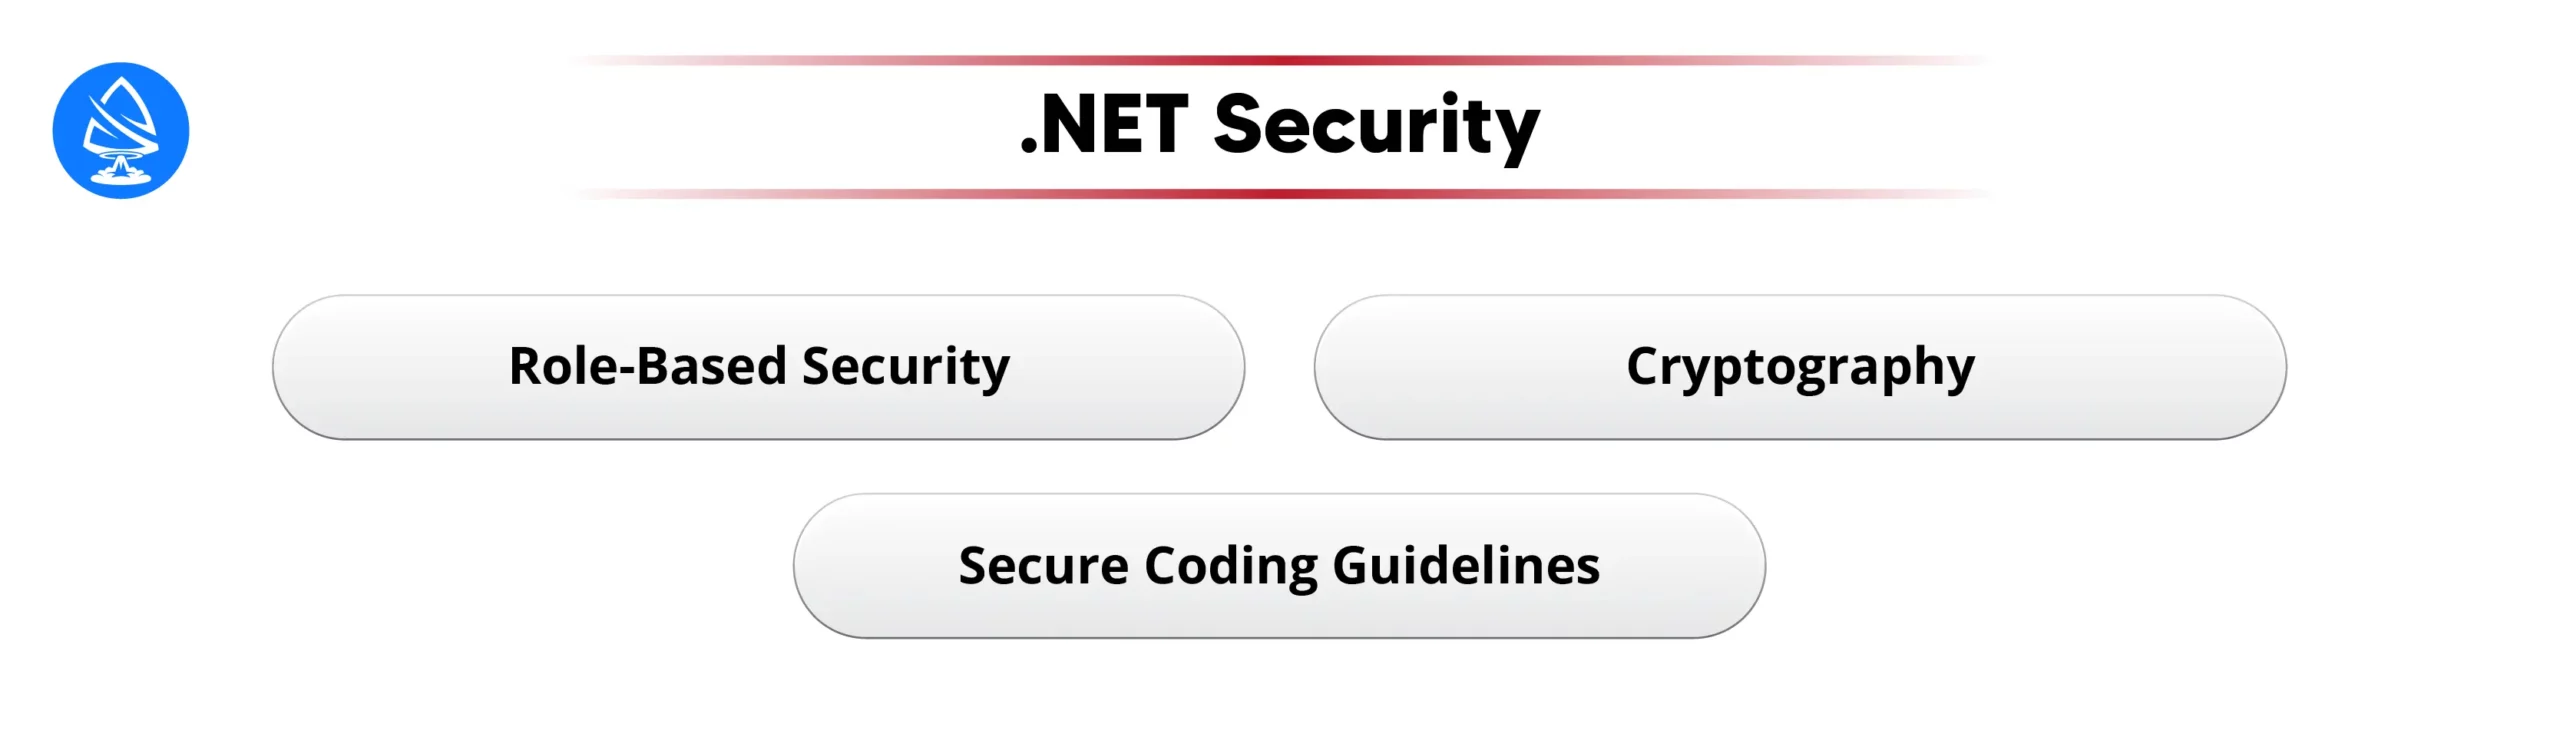 .NET Security: 